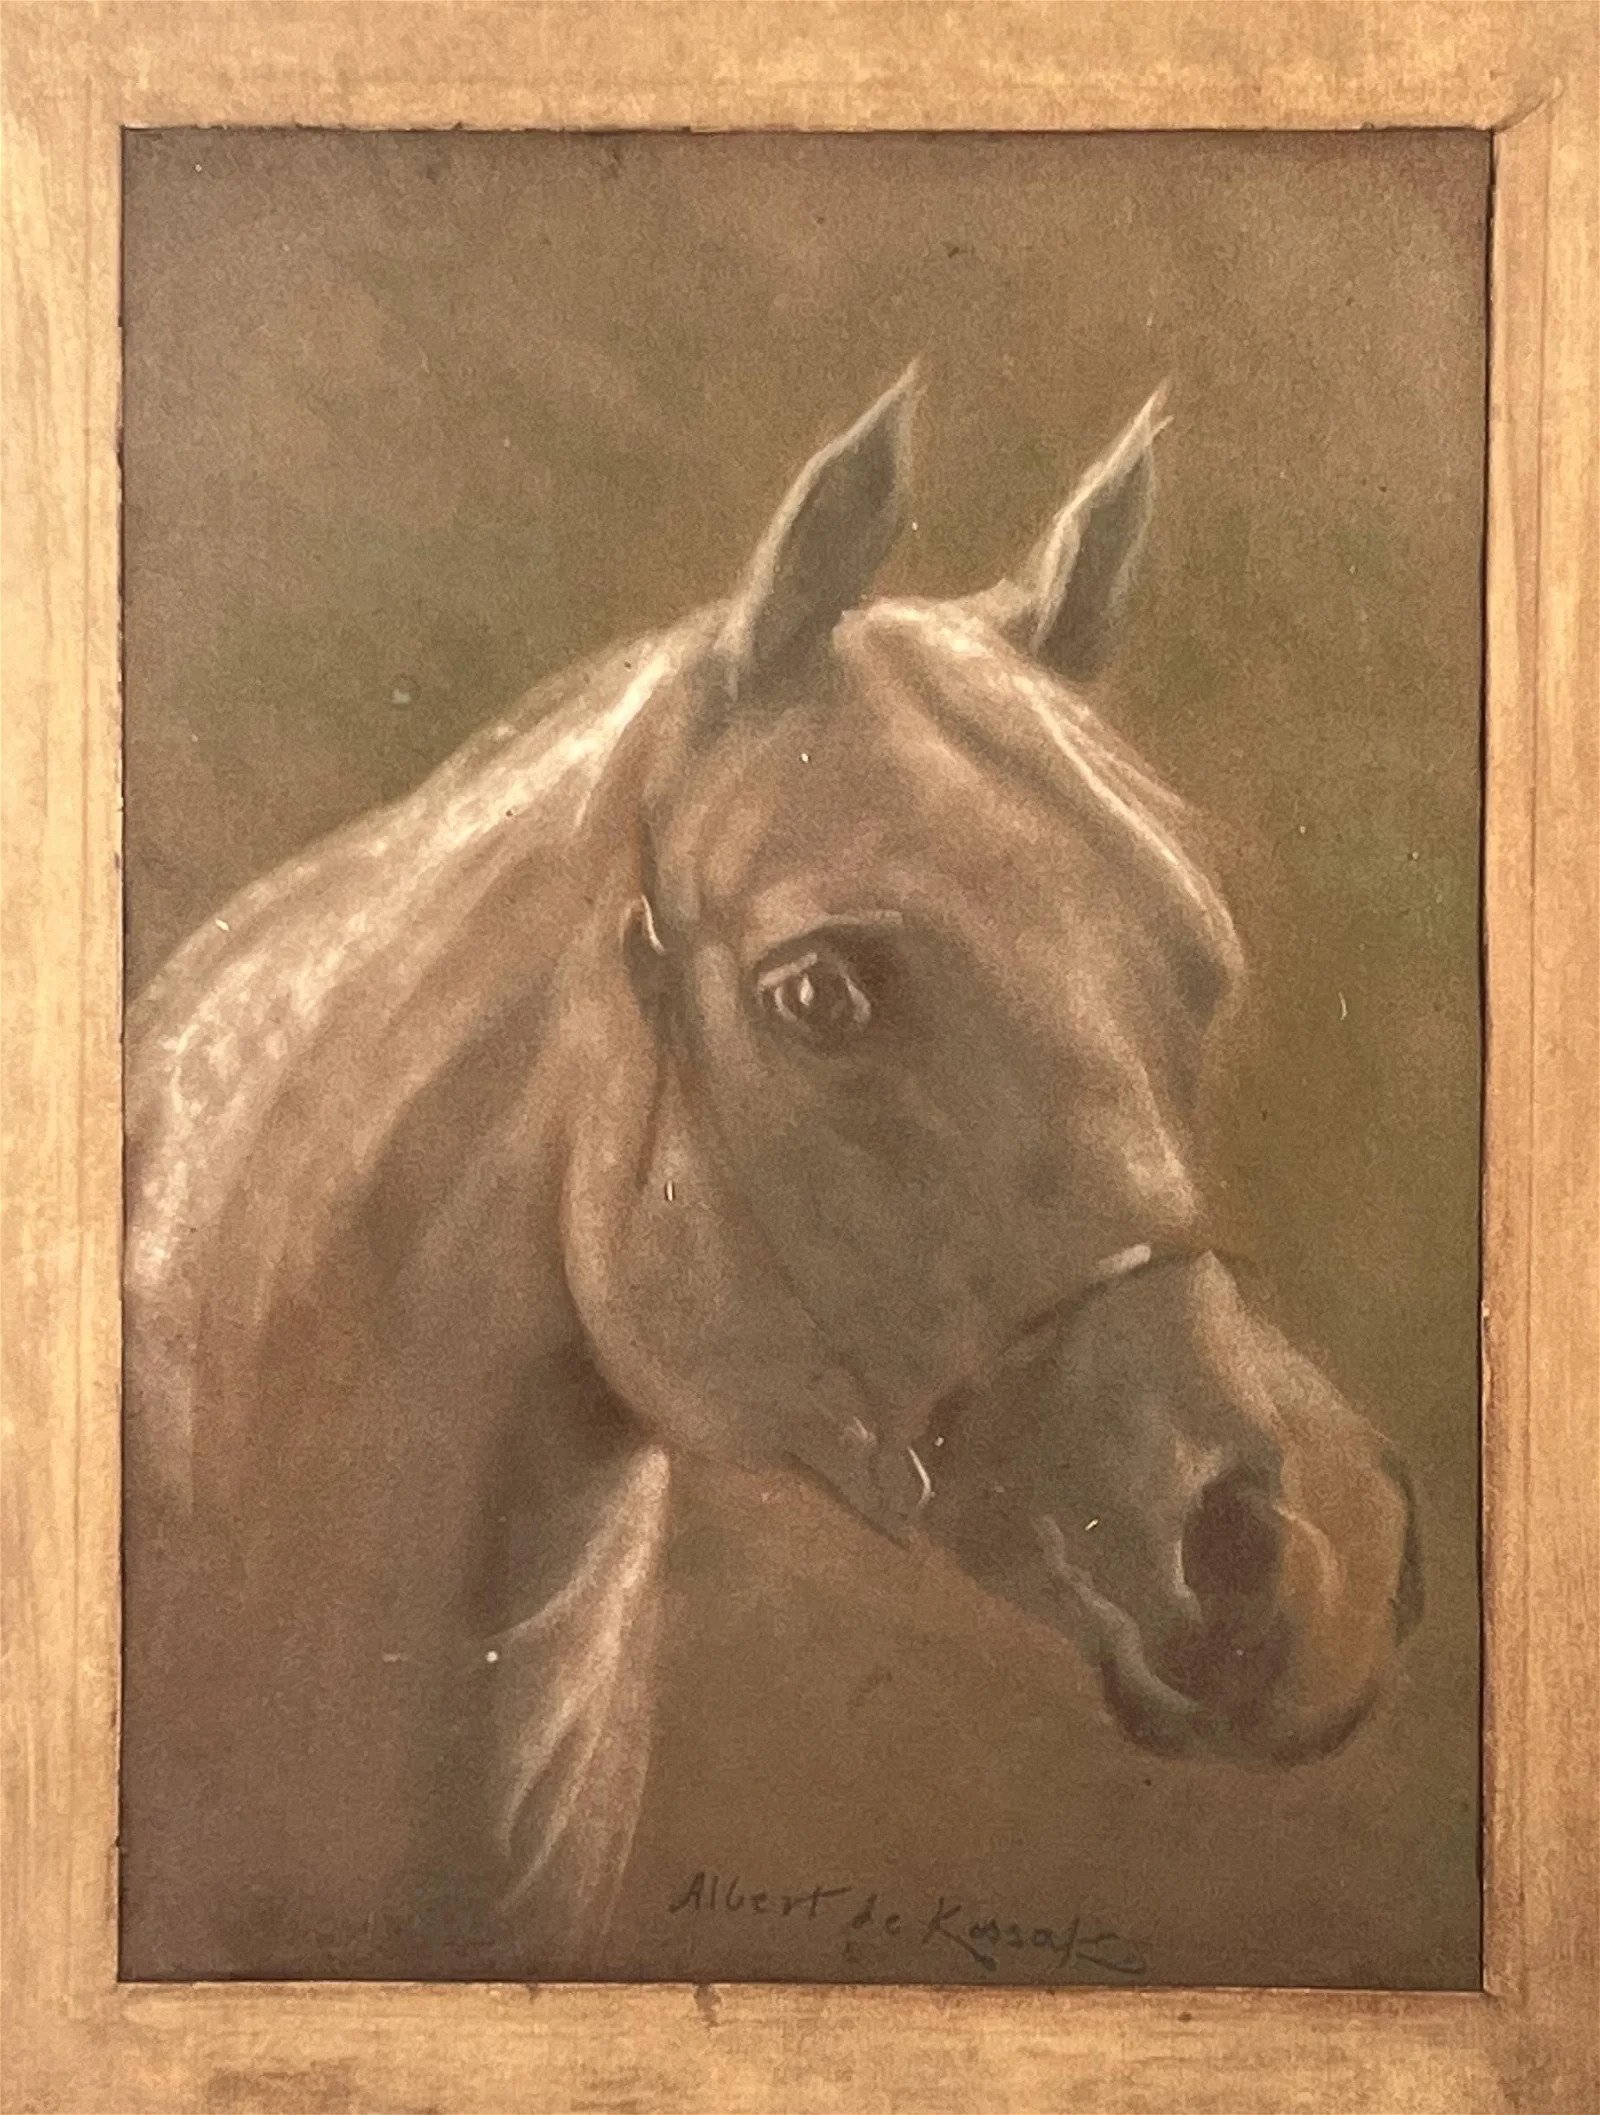 Wojciech Albert de Kossak (???) "Studium głowy konia", źródło: San Rafael Auction Gallery